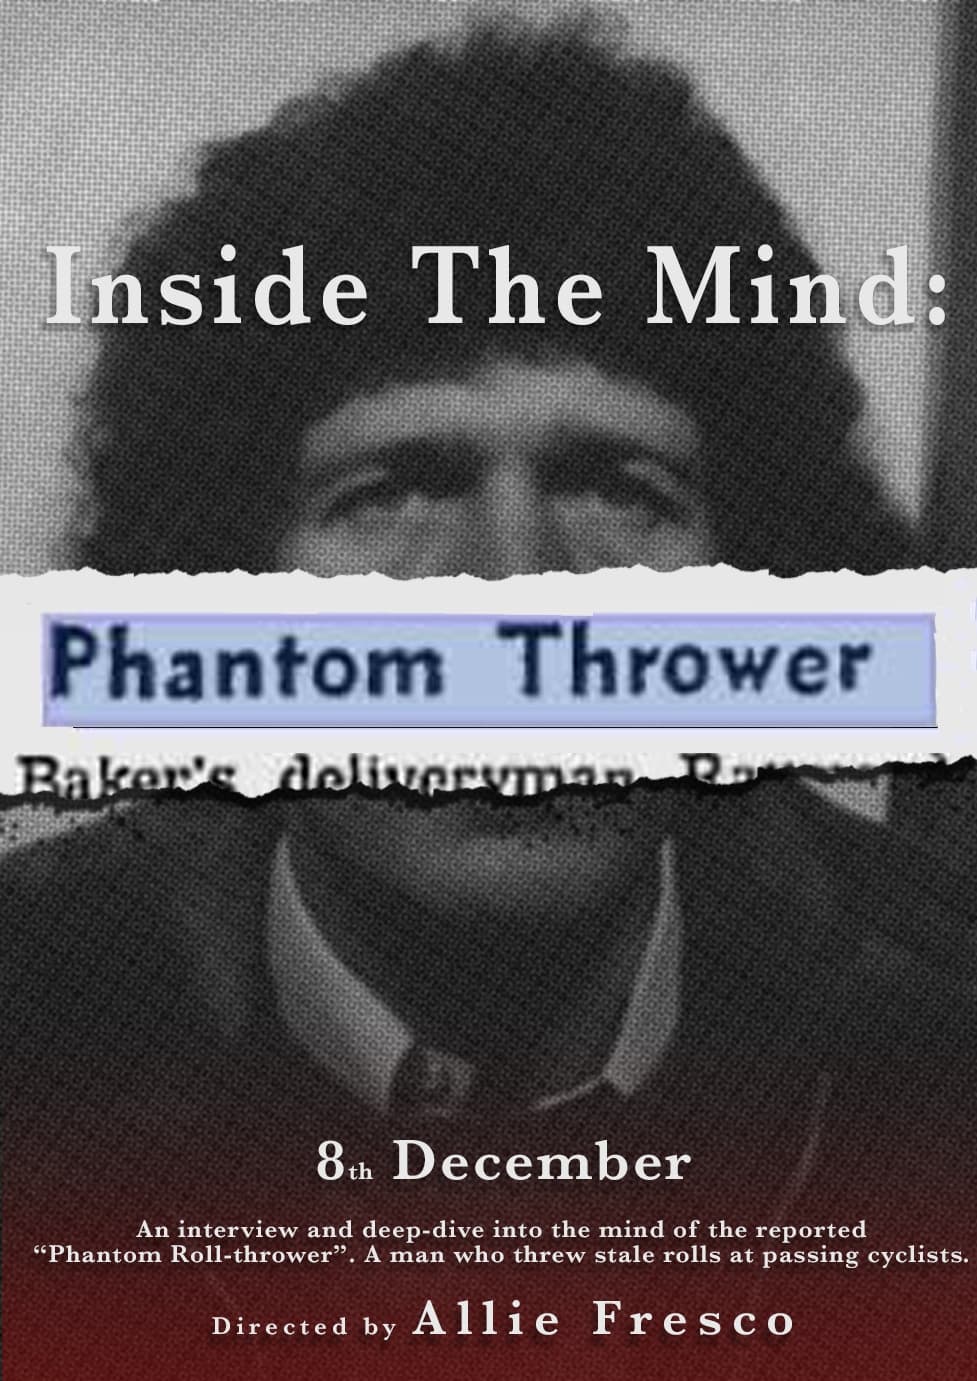 Inside the Mind: The Phantom Roll-Thrower